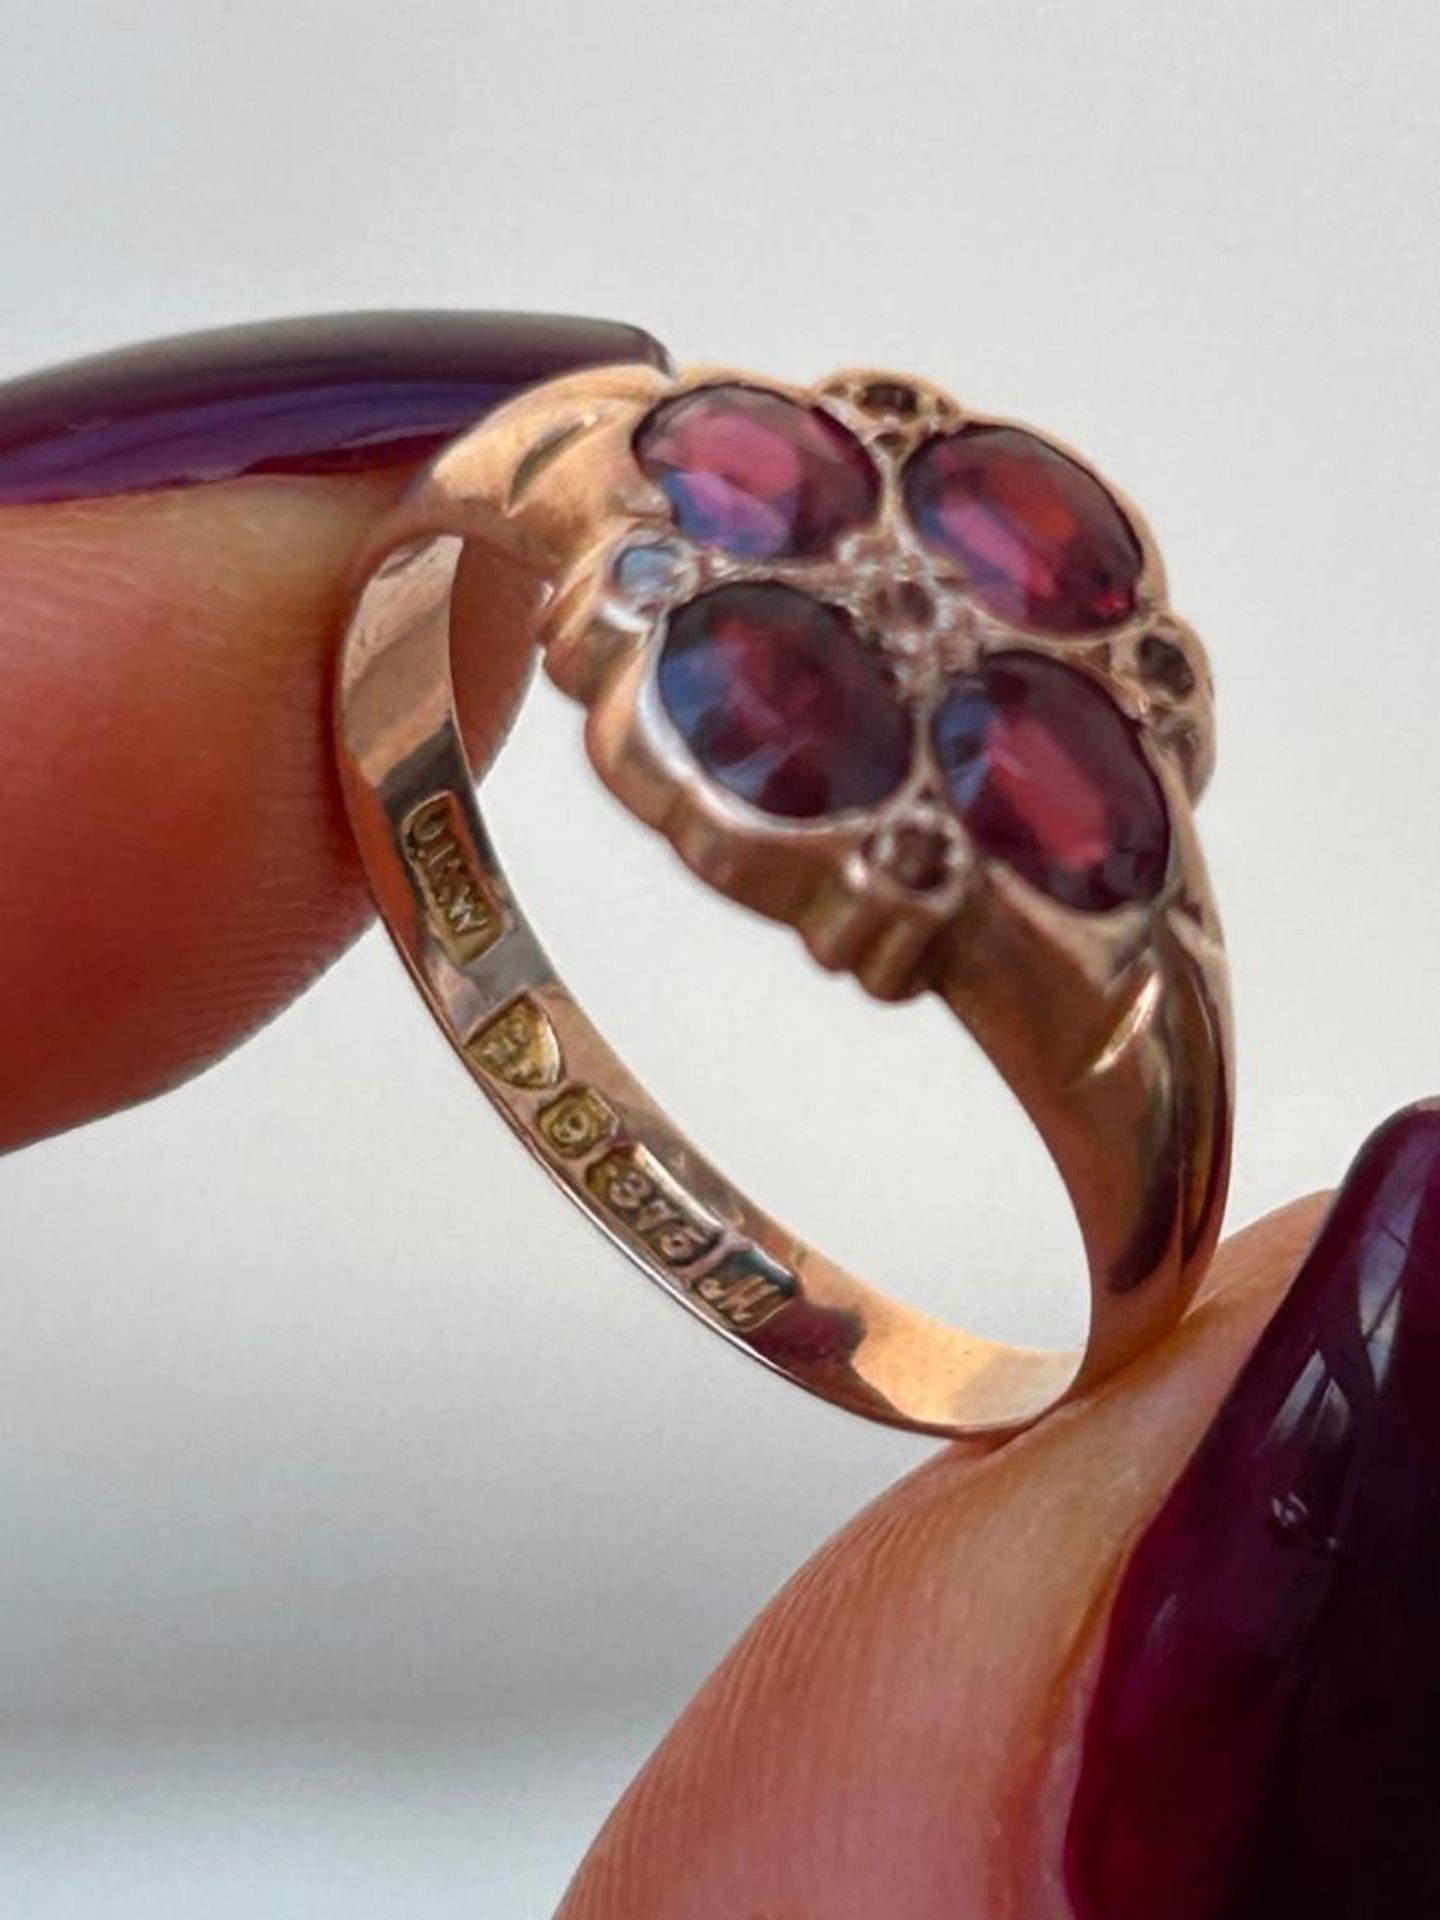 9ct Gold Garnet and Diamond Ring - Image 6 of 6